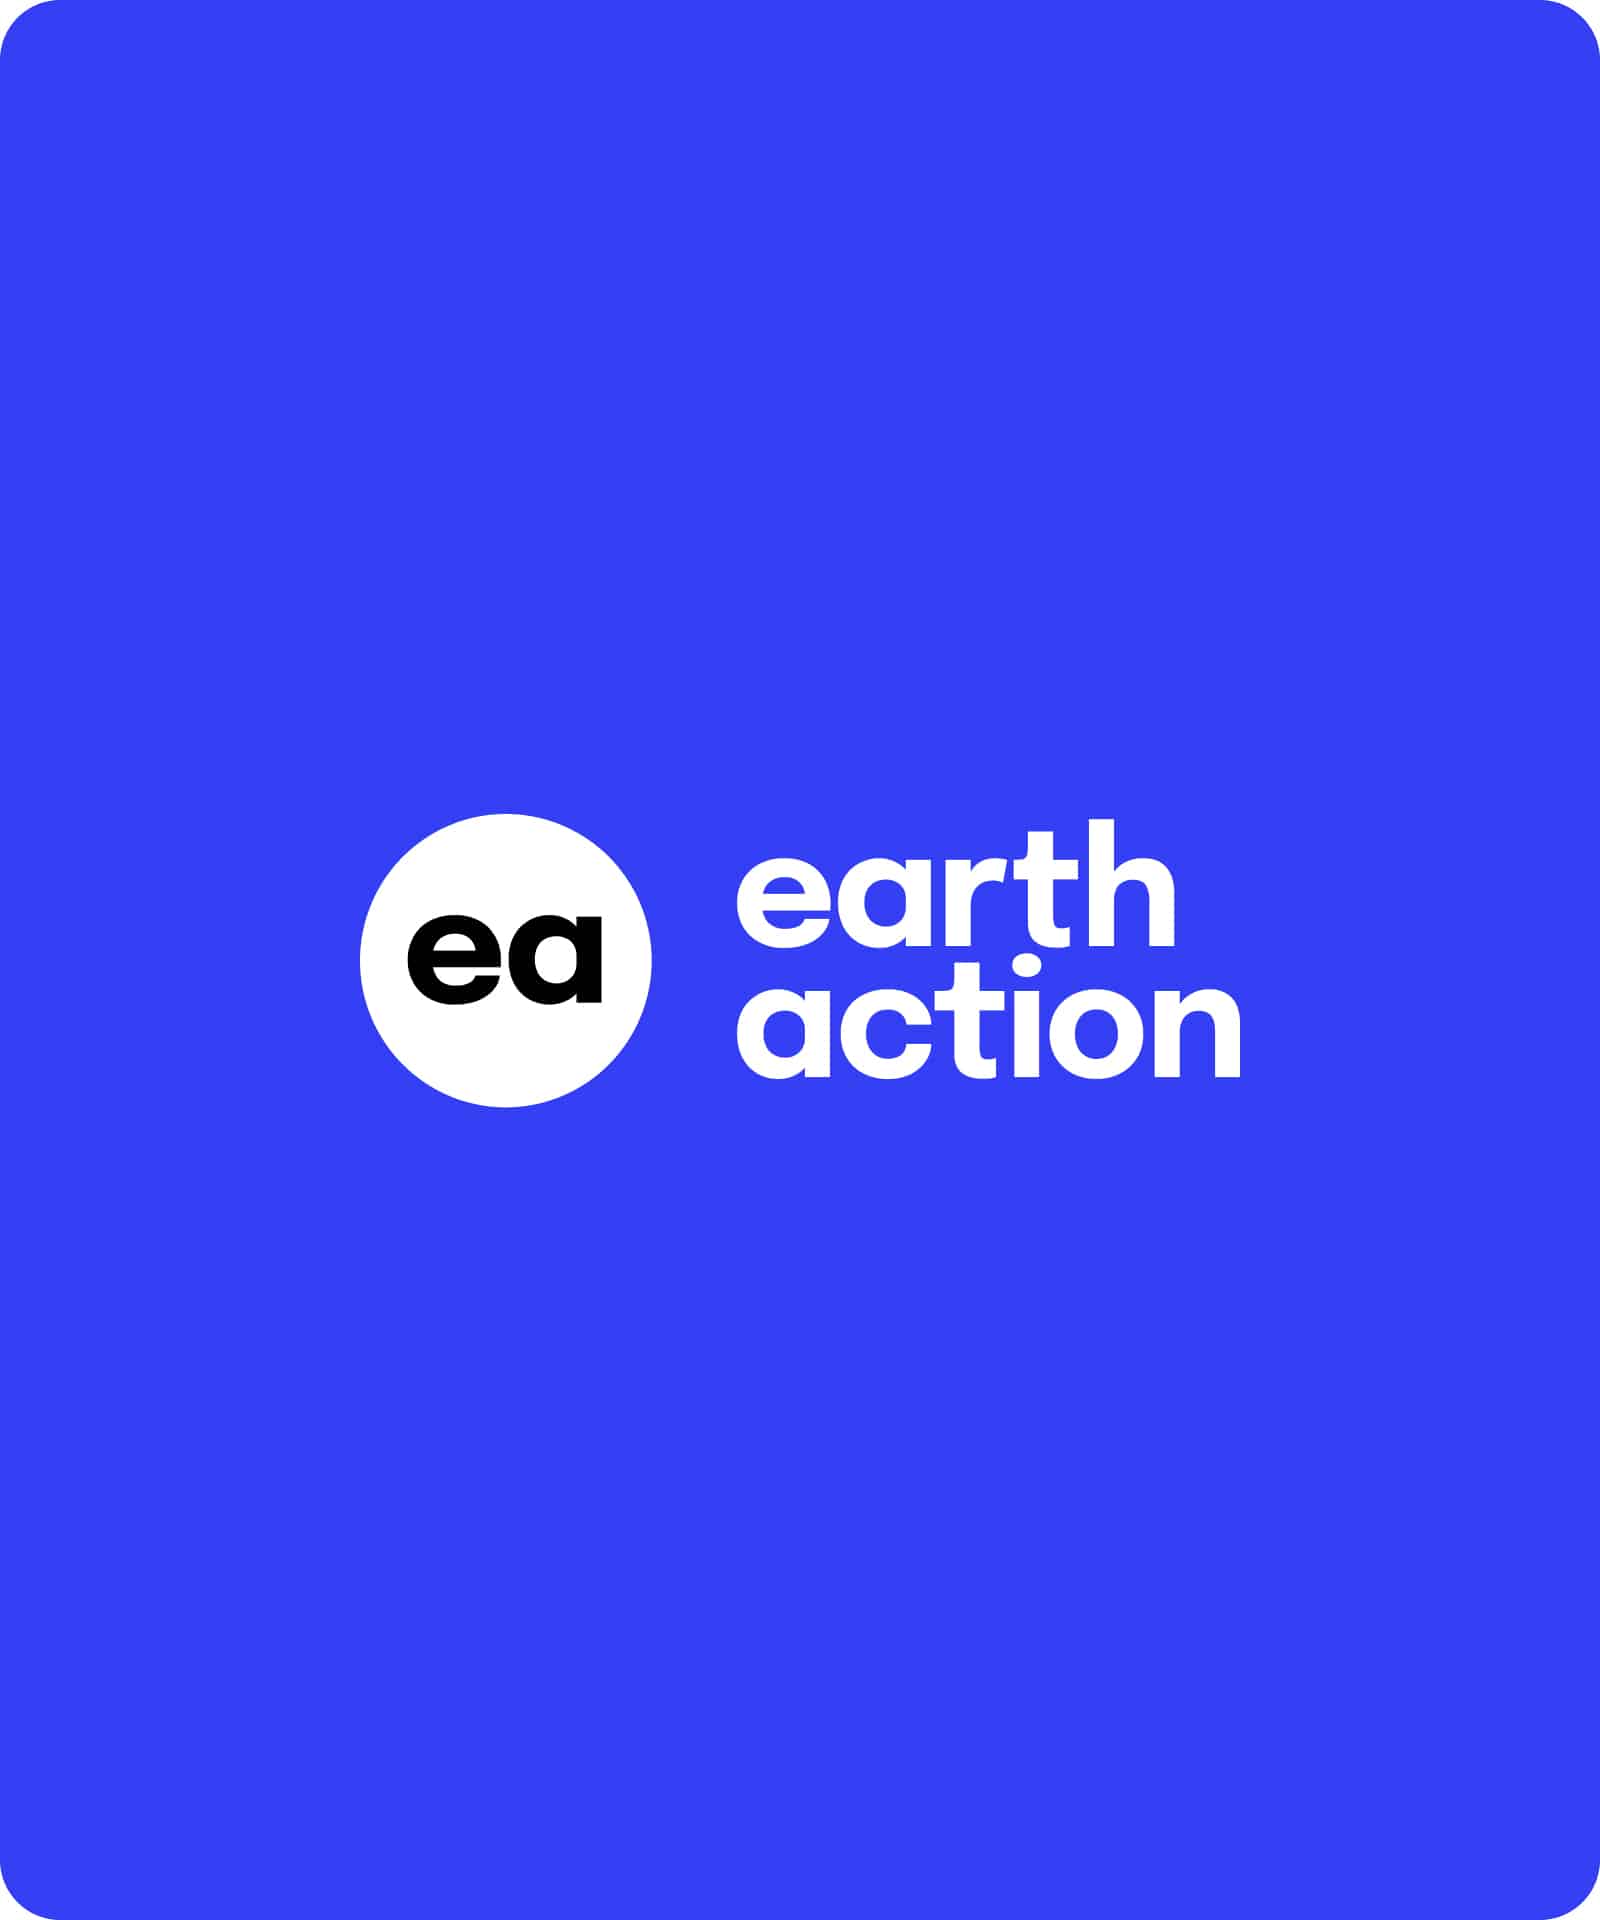 Earth Action: visual identity